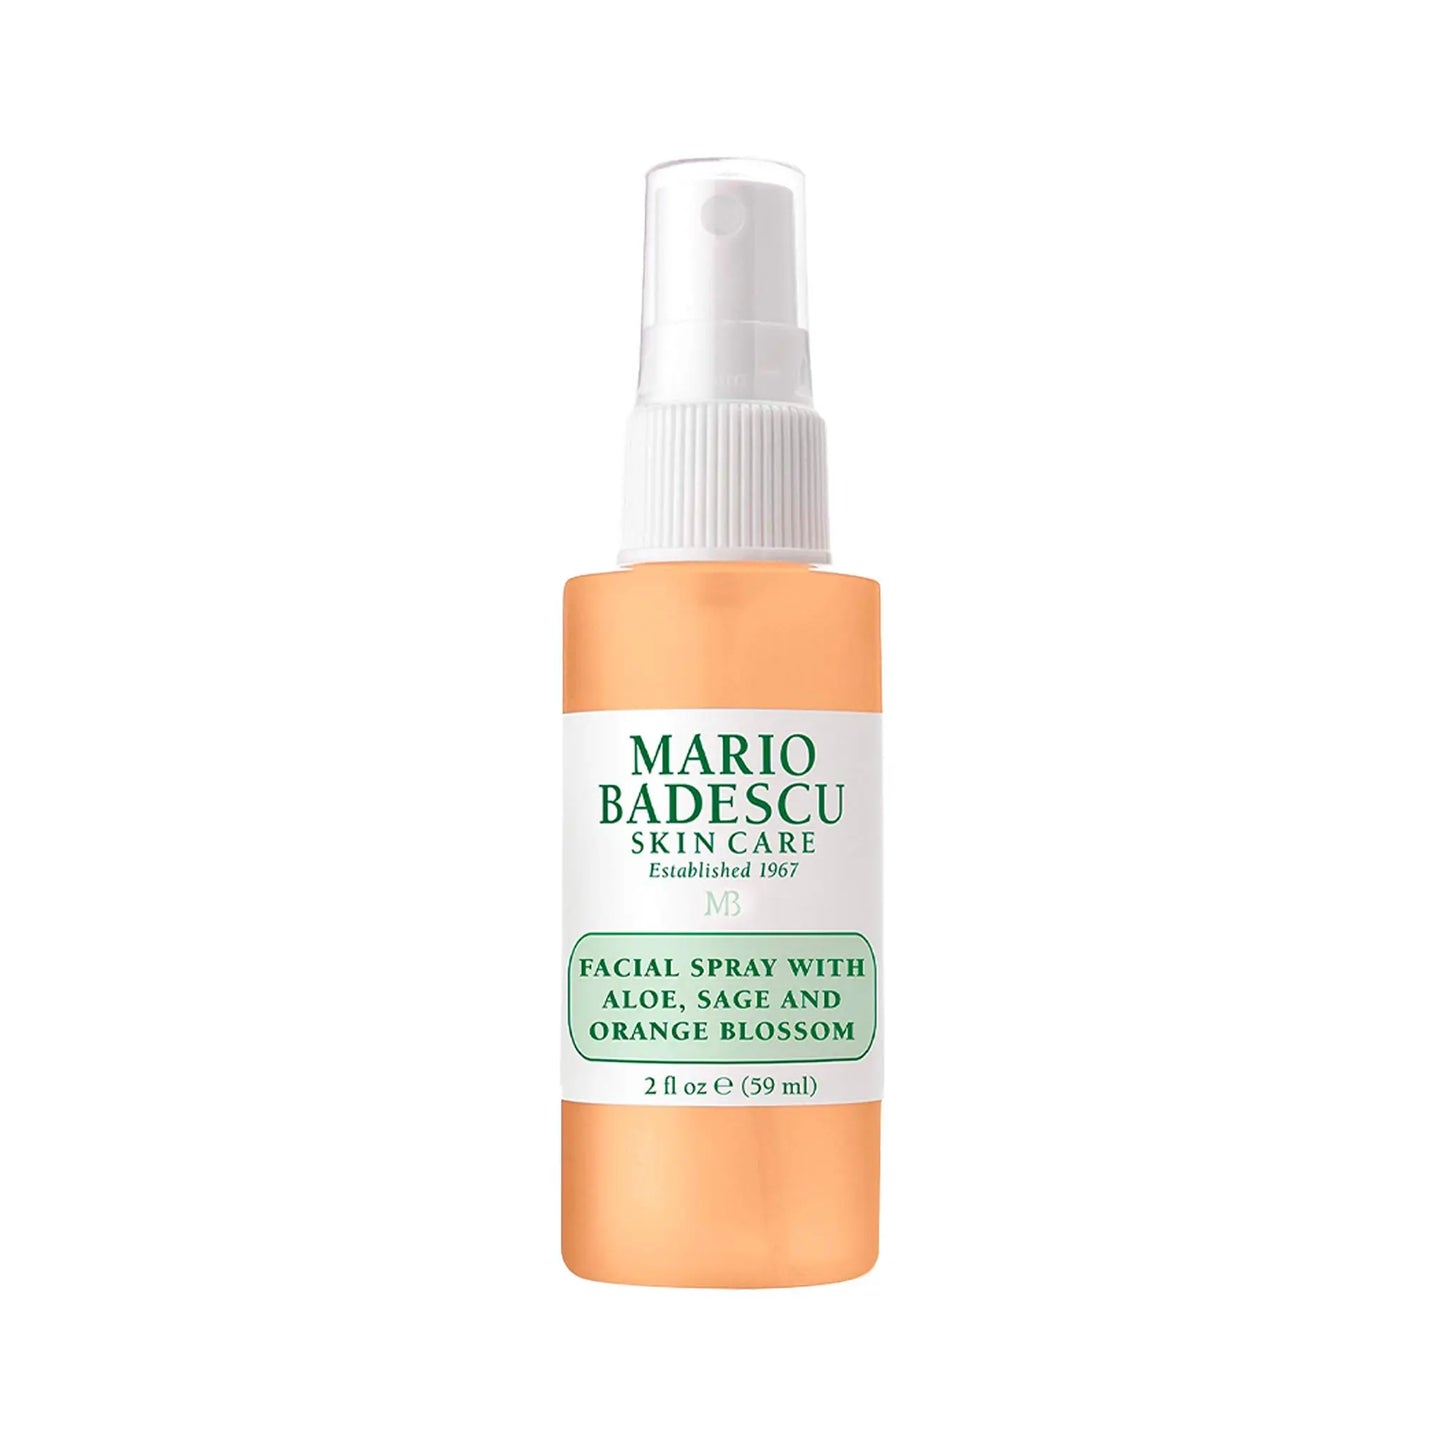 MARIO BADESCU Facial Spray with Aloe, Sage And Orange Blossom 59ML Mario Badescu